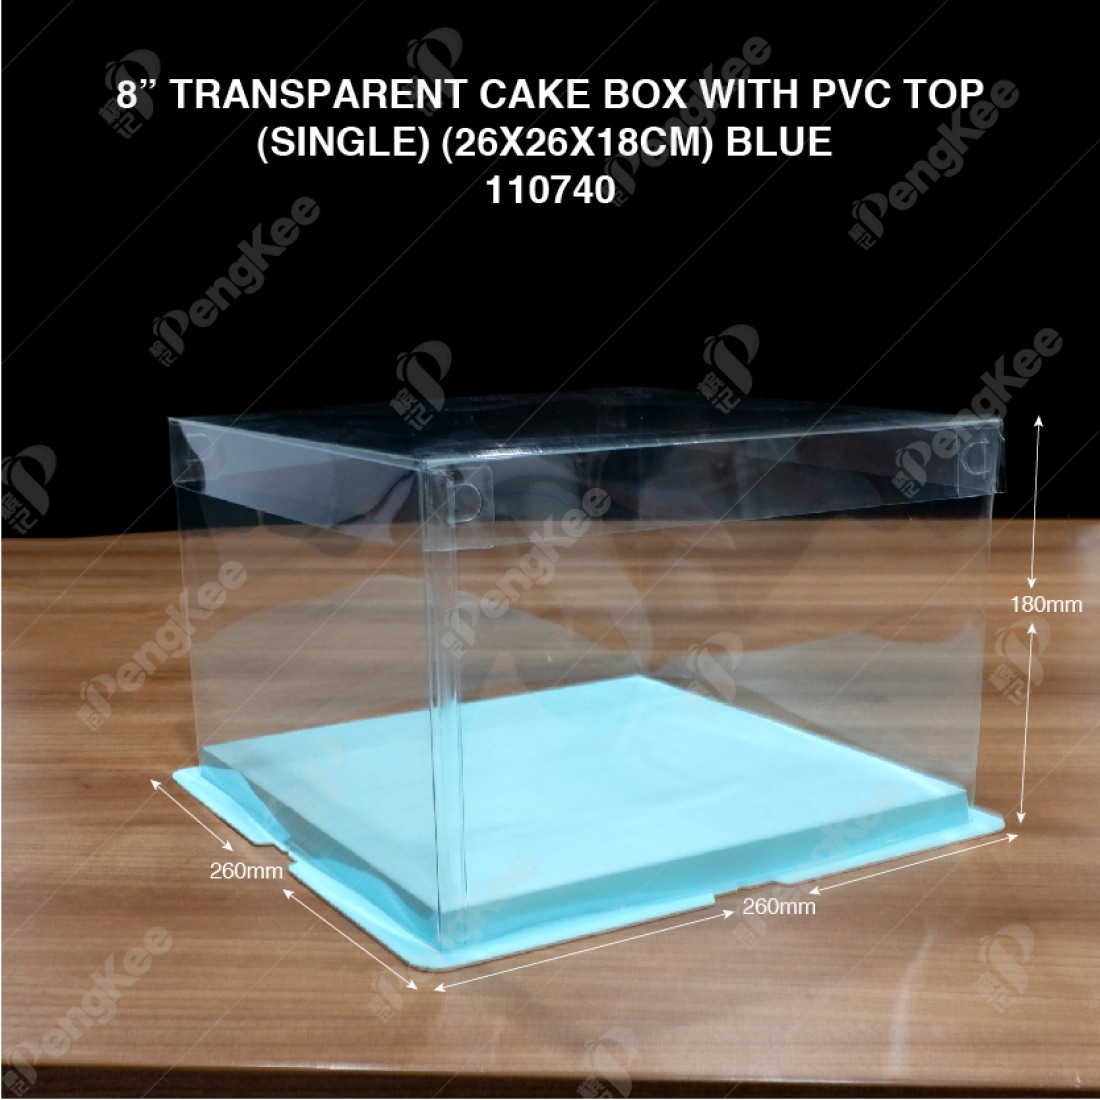 8" TRANSPARENT CAKE BOX WITH PVC TOP(SINGLE) (26*26*18CM)- BLUE